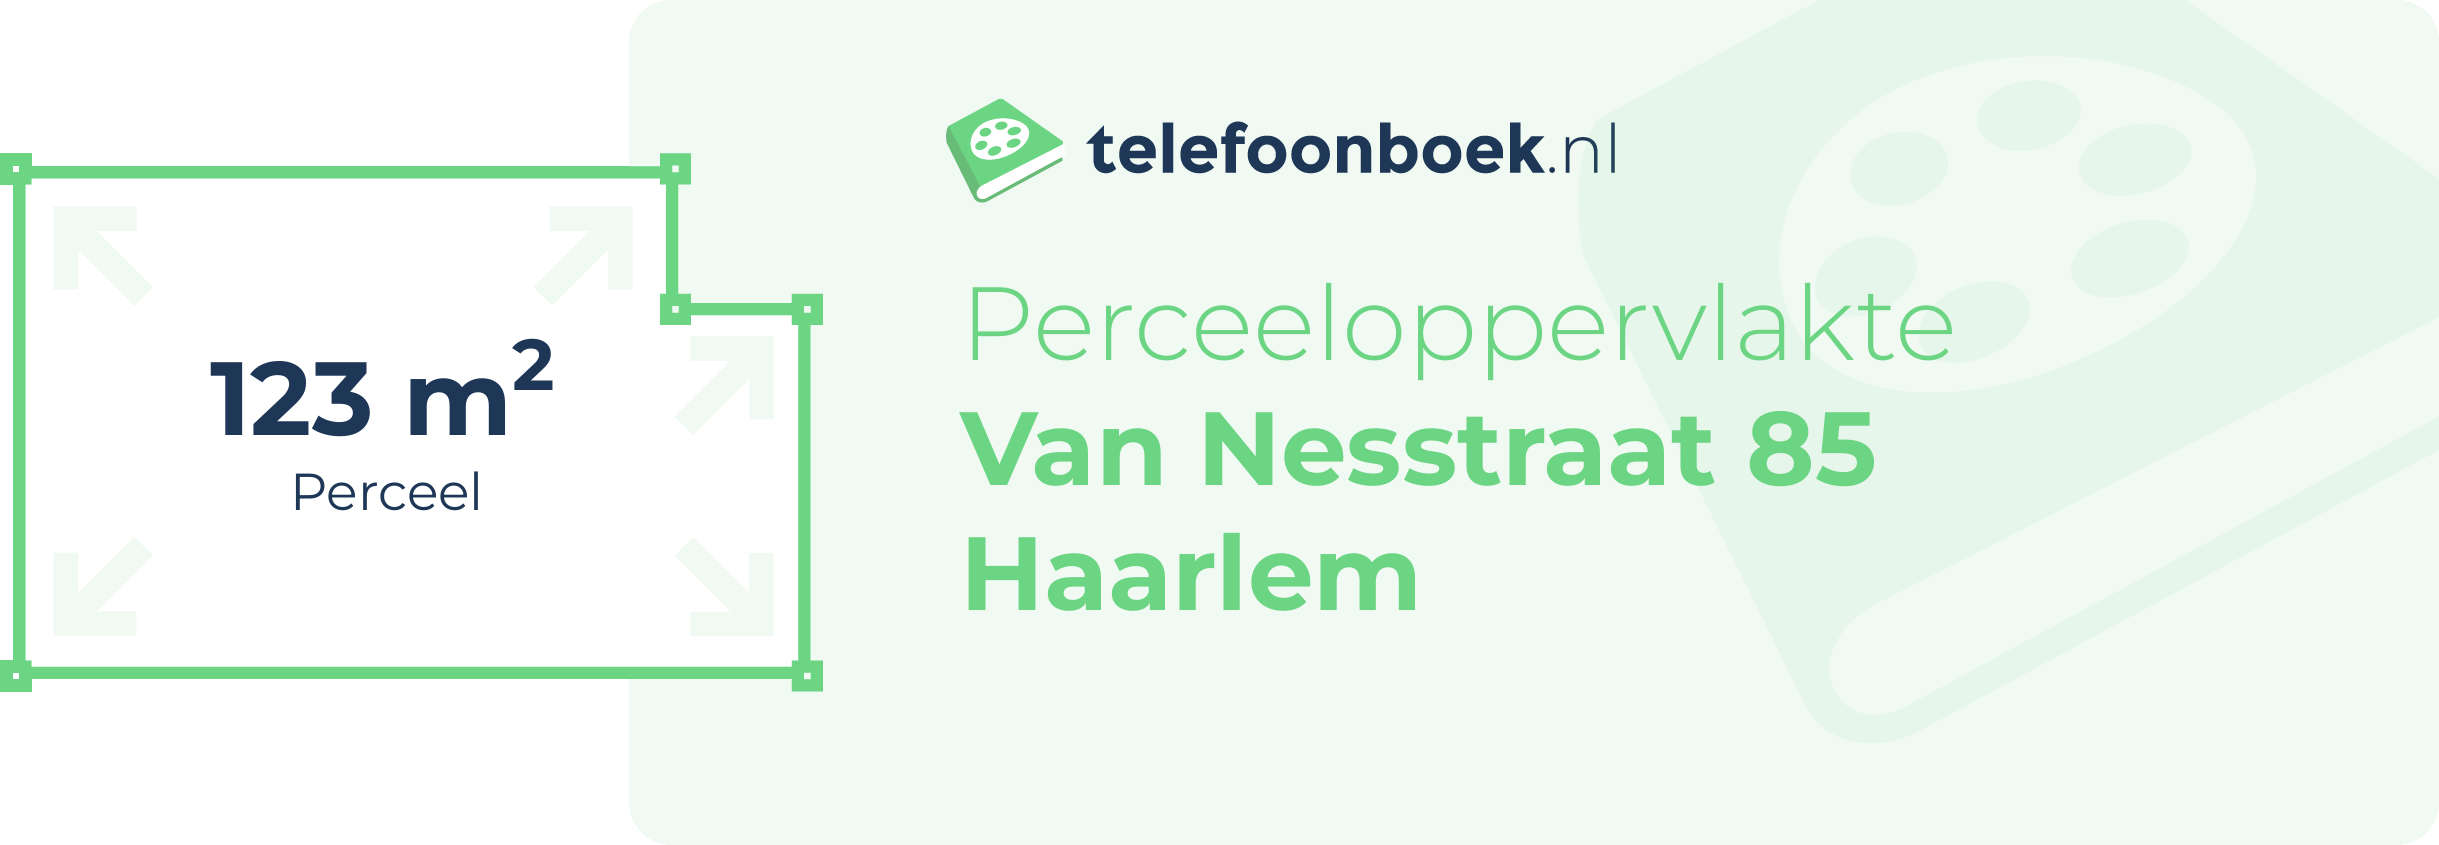 Perceeloppervlakte Van Nesstraat 85 Haarlem